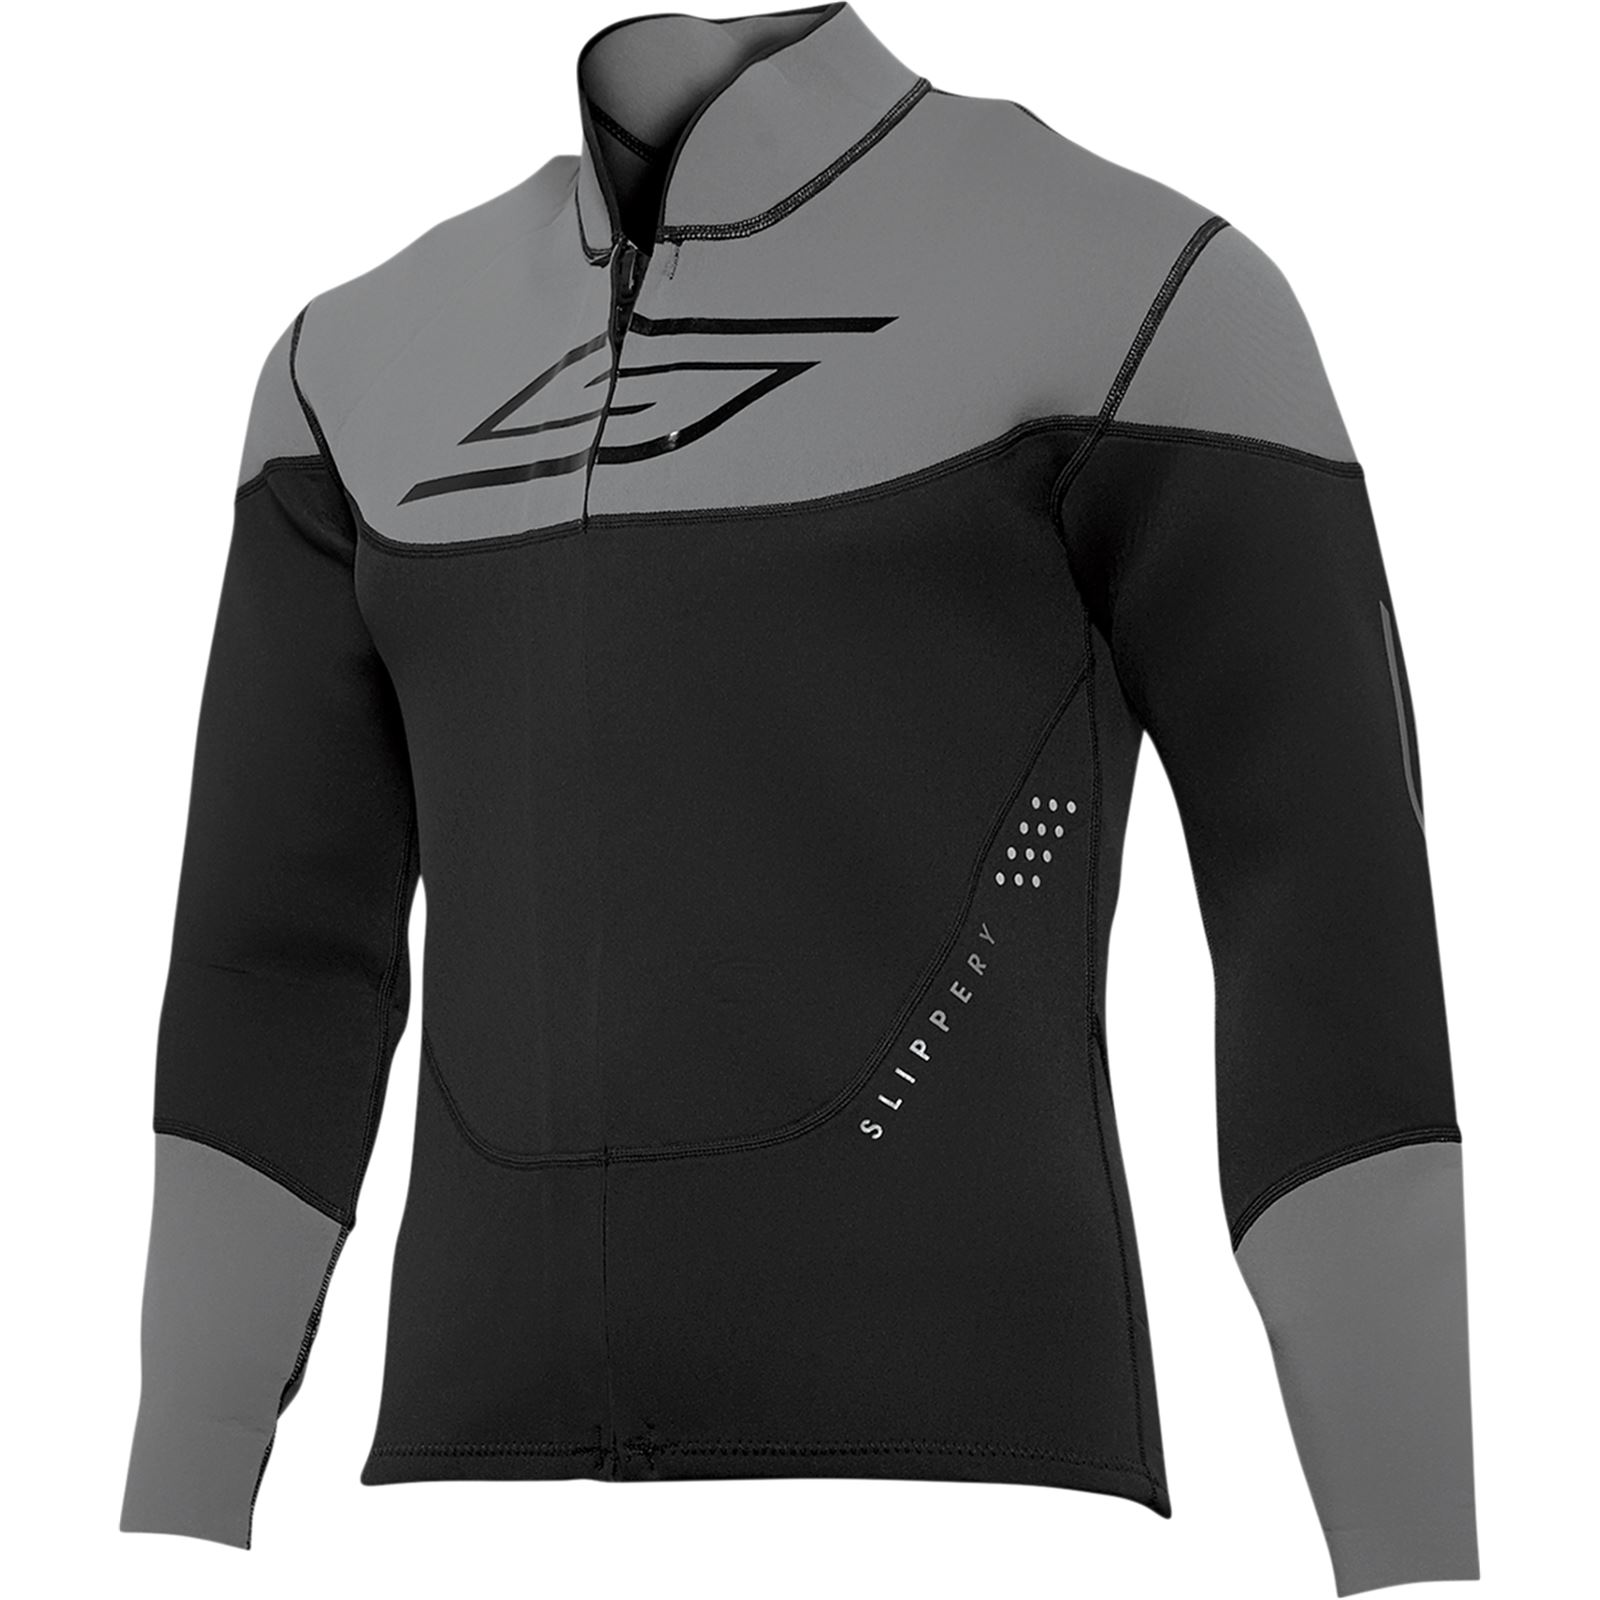 Slippery Breaker Wetsuit - Black/Charcoal - Large